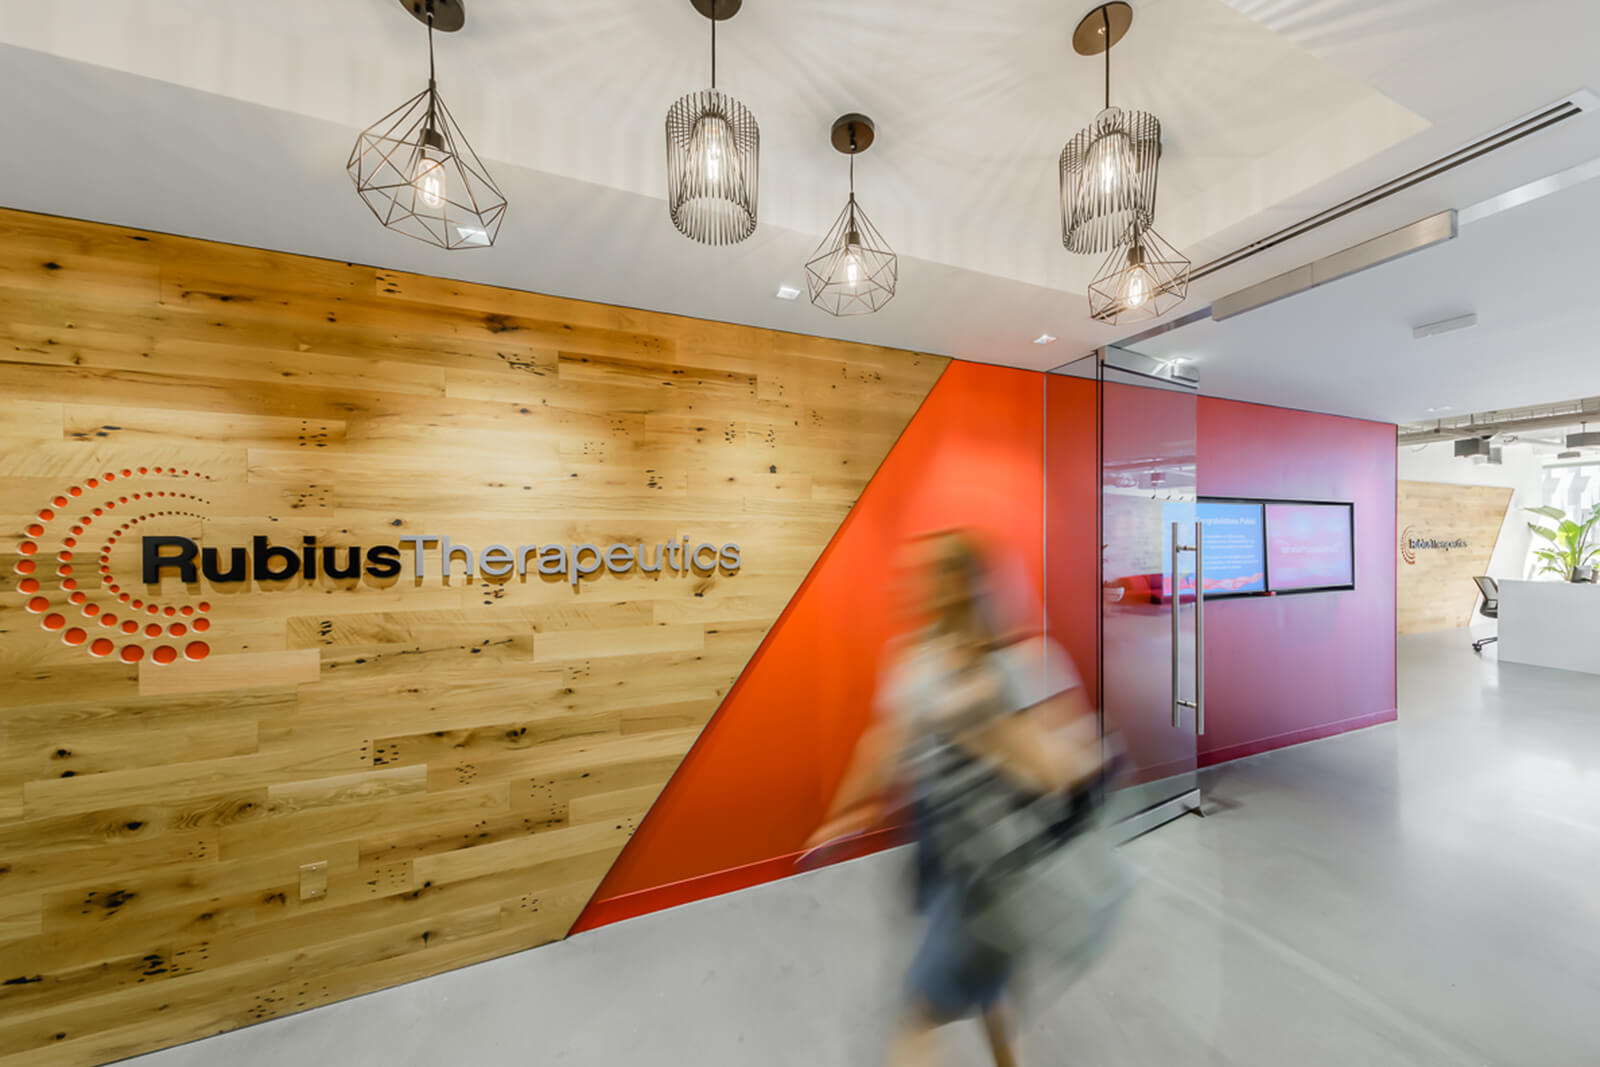 design build services firm for rubius therapeutics